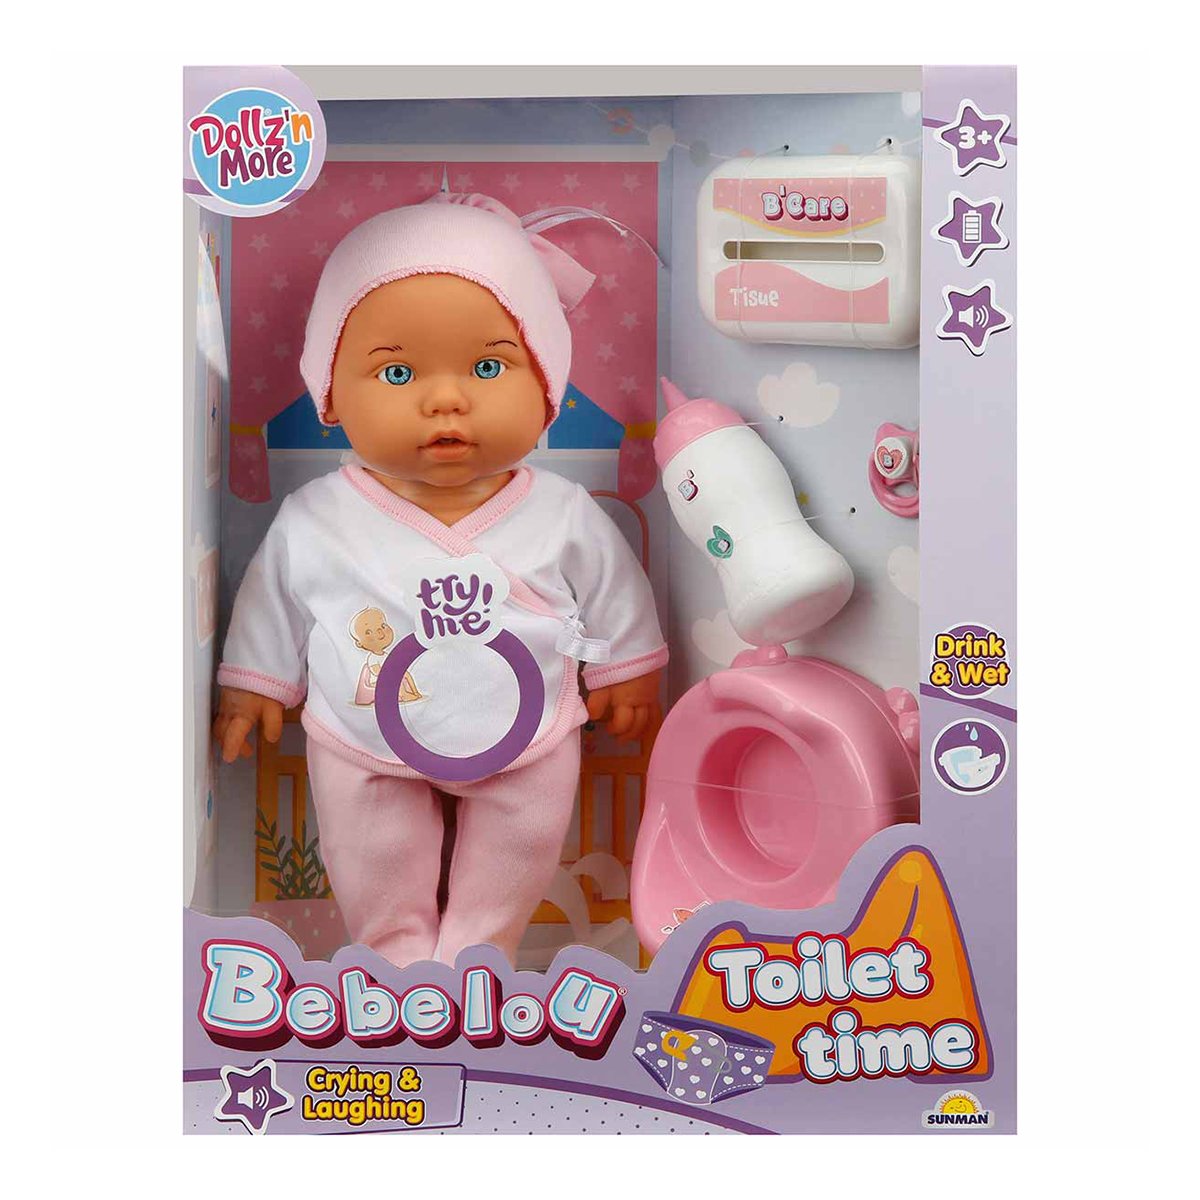 Papusa bebelus Bebelou, Dollzn More, Toilet Time, 35 cm, roz Bebelou